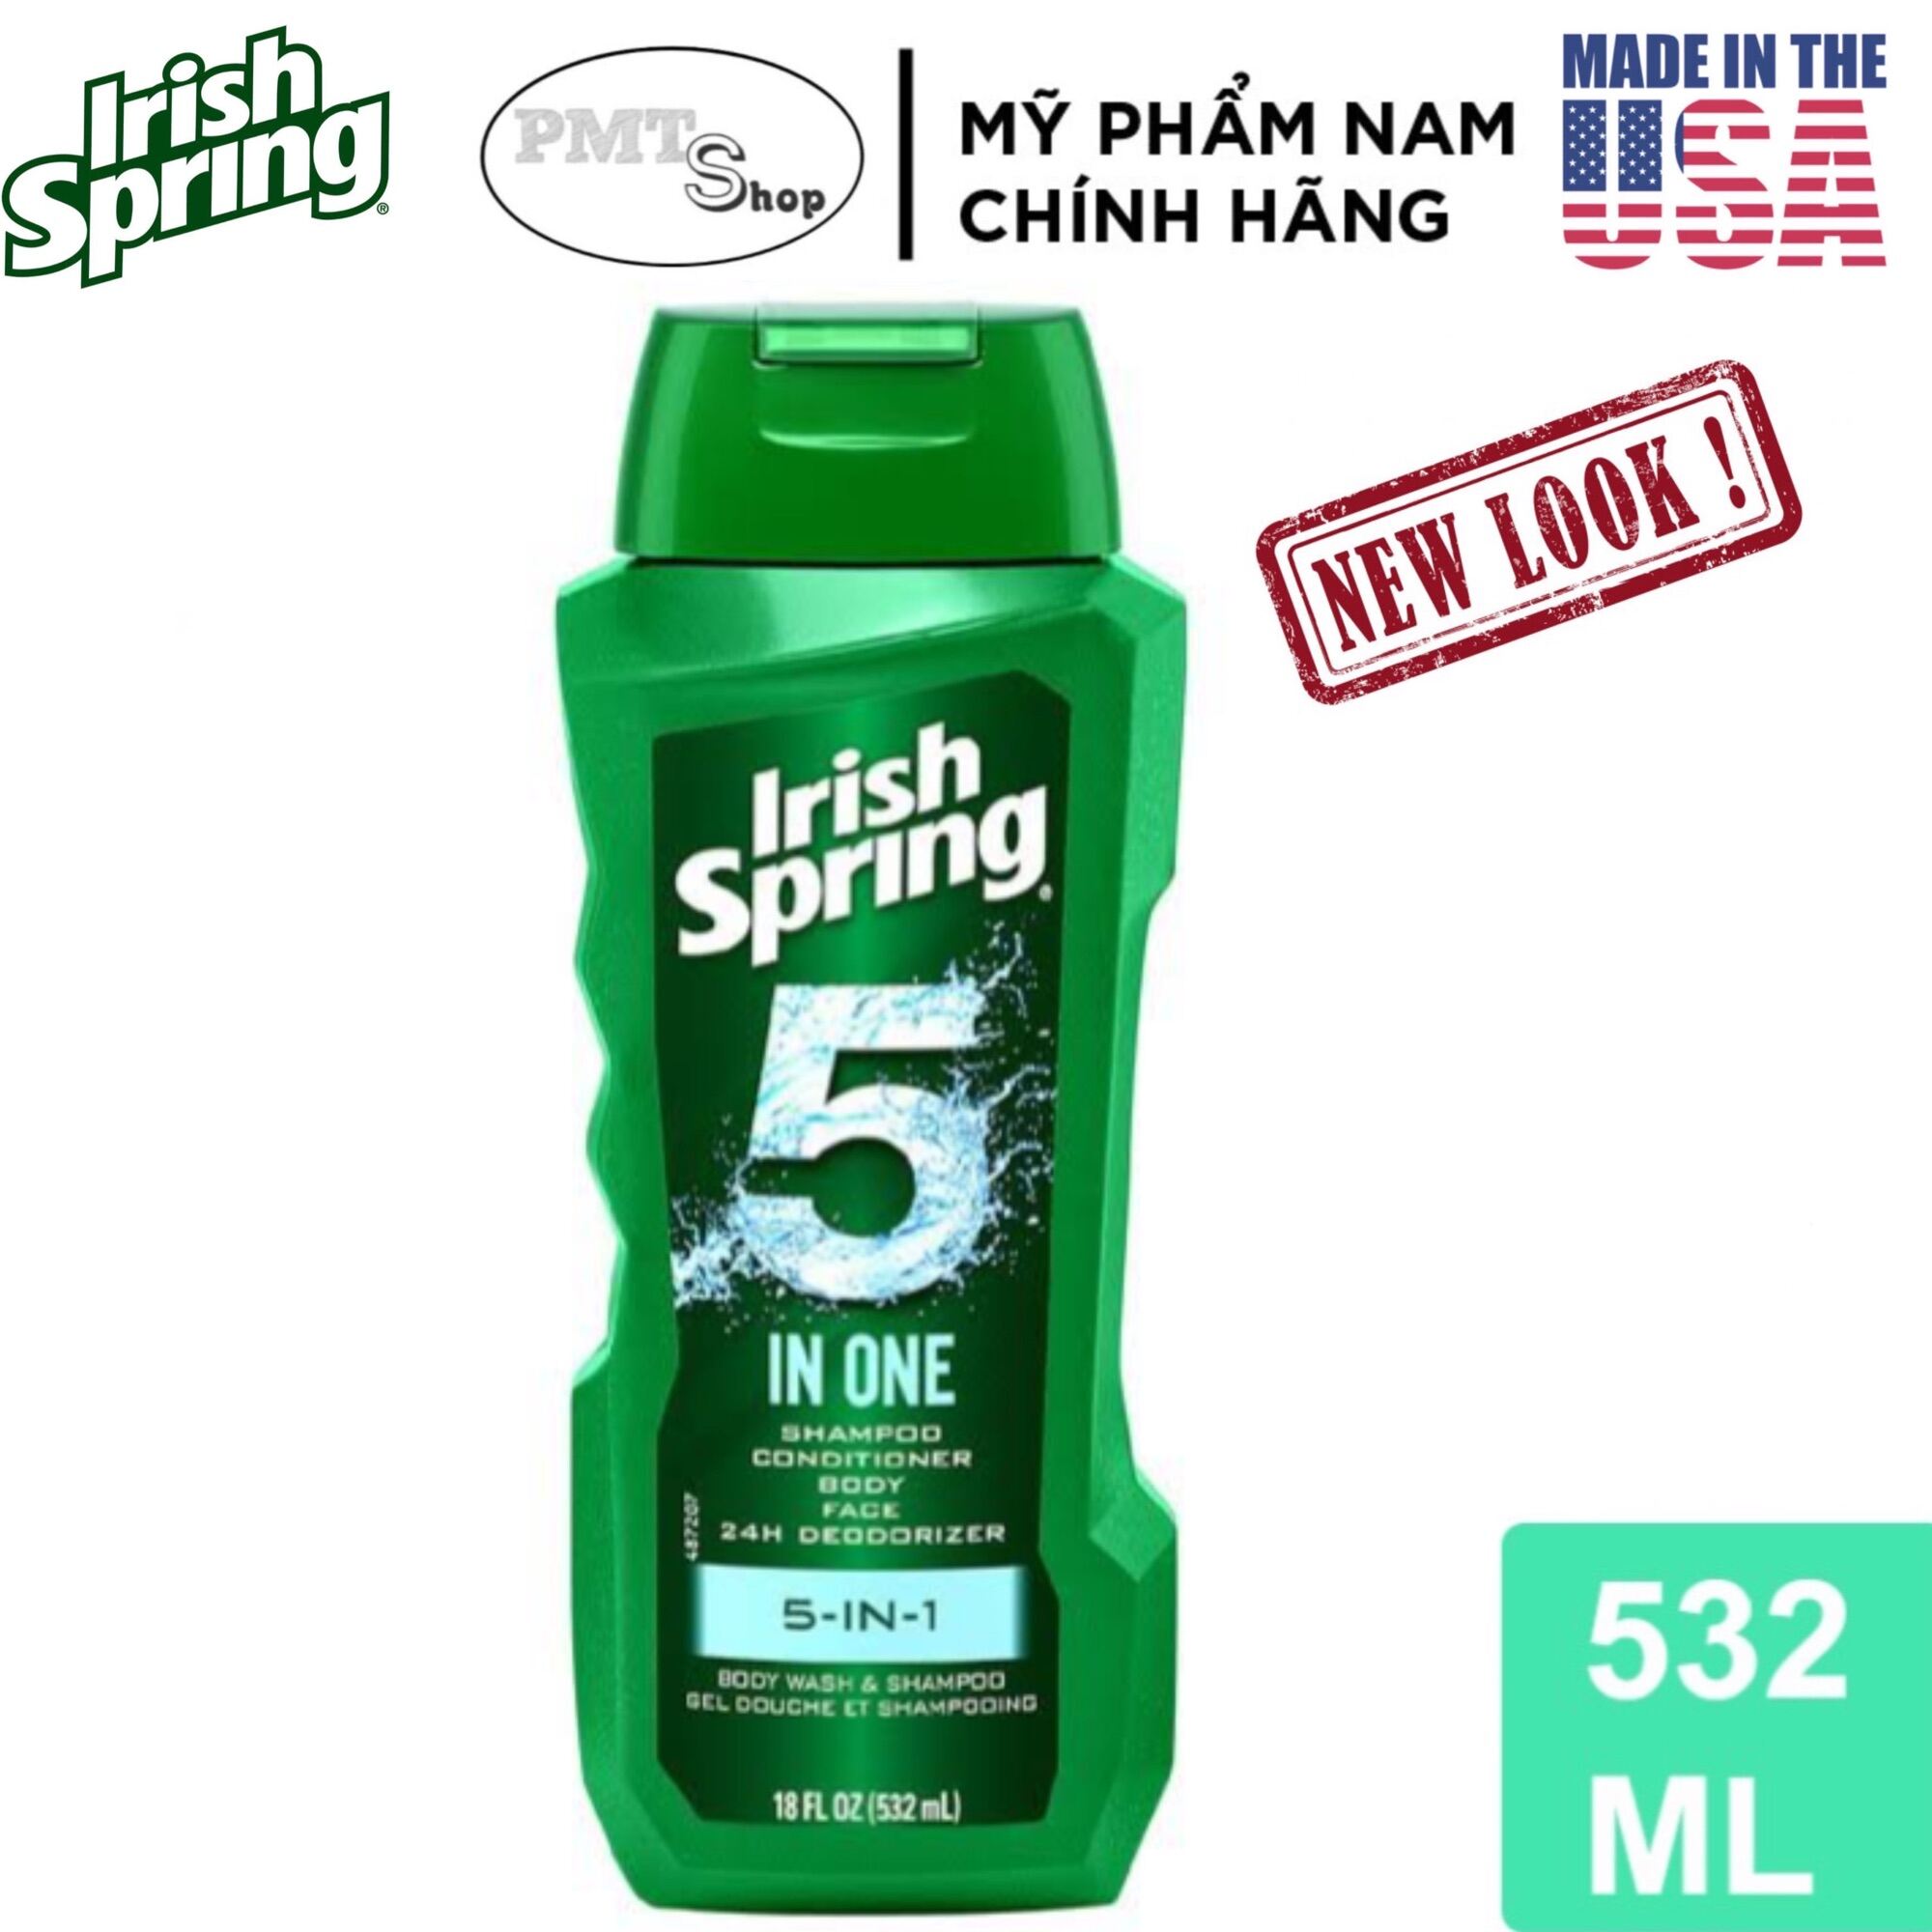 Sữa tắm gội toàn thân nam Irish Spring 5in1 Hair, Face thumbnail